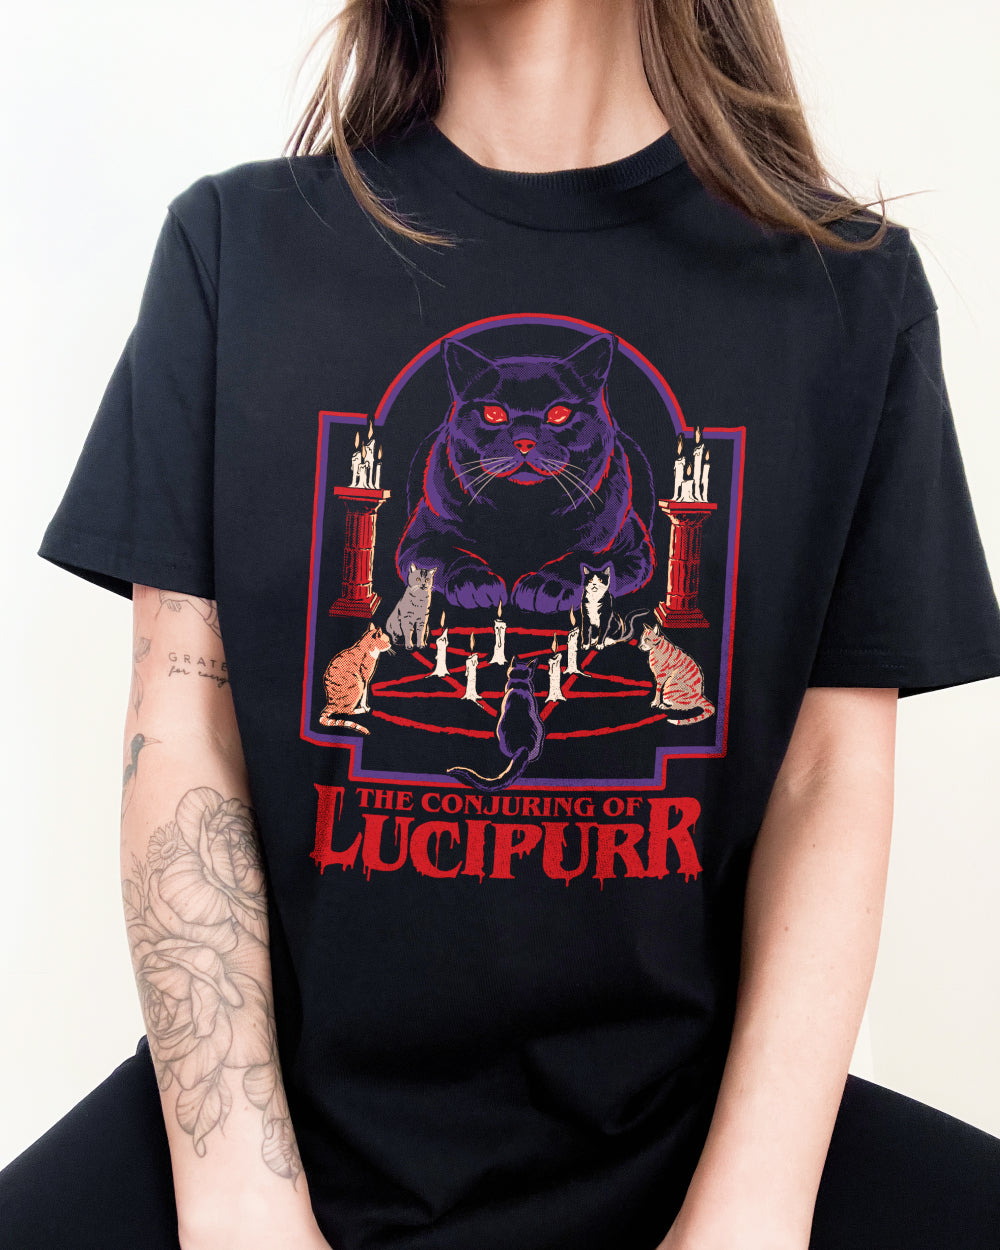 The Conjuring of Lucipurr T-Shirt Australia Online